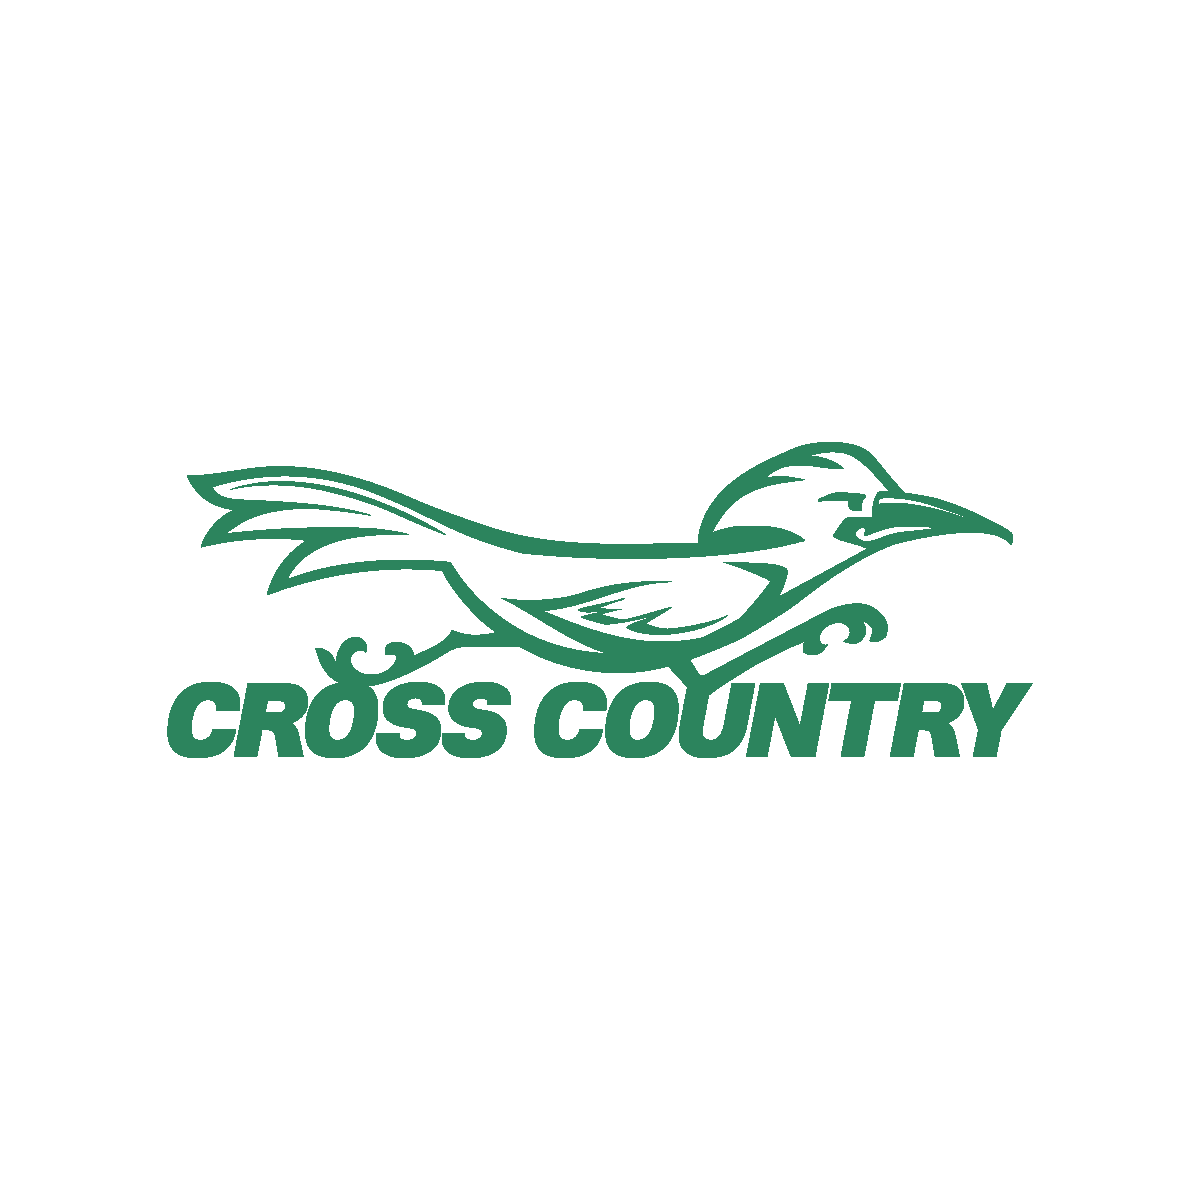 Cross Country mascot - green